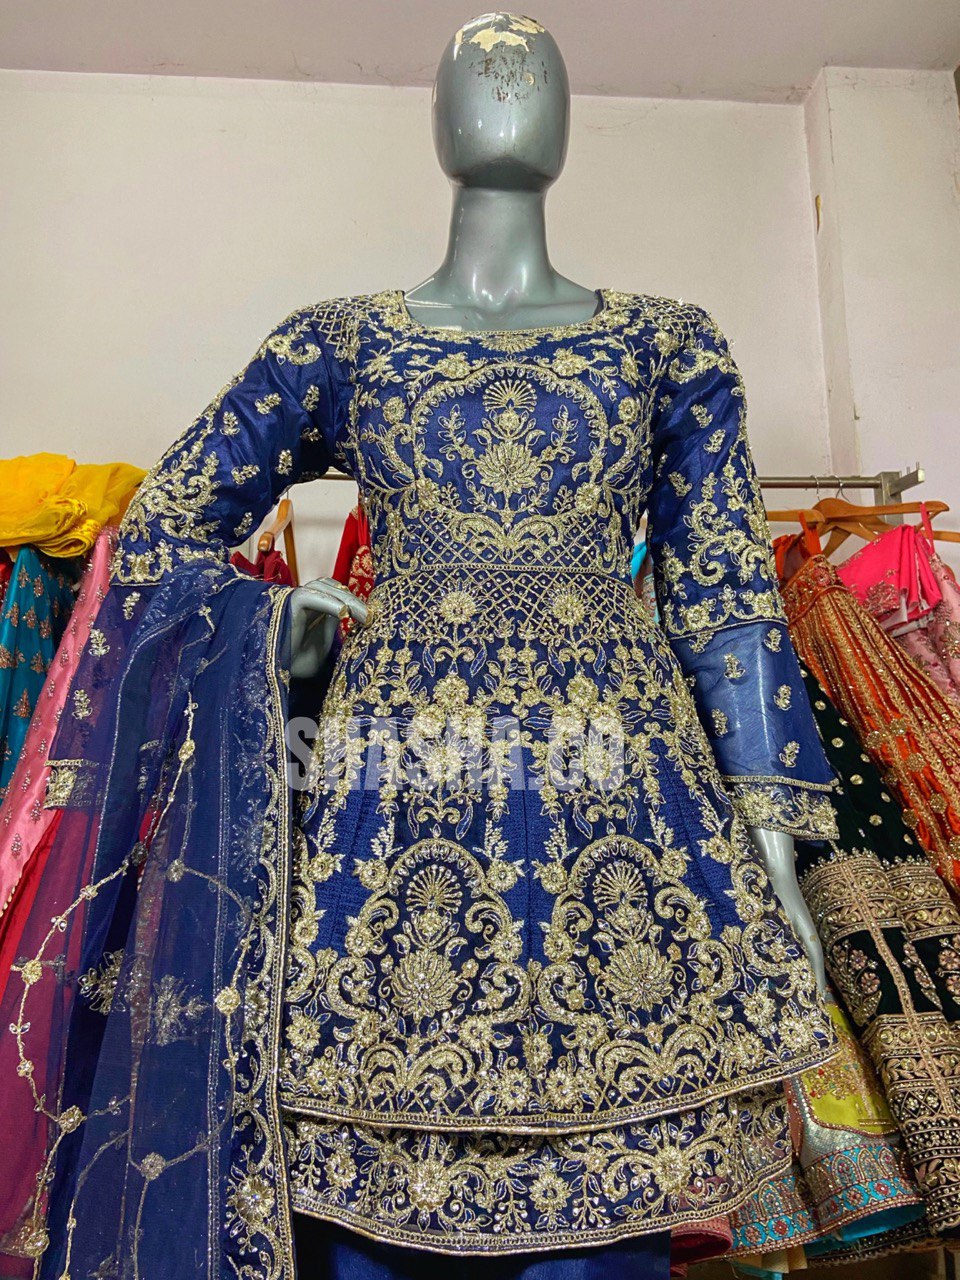 Blue Libaz Dress